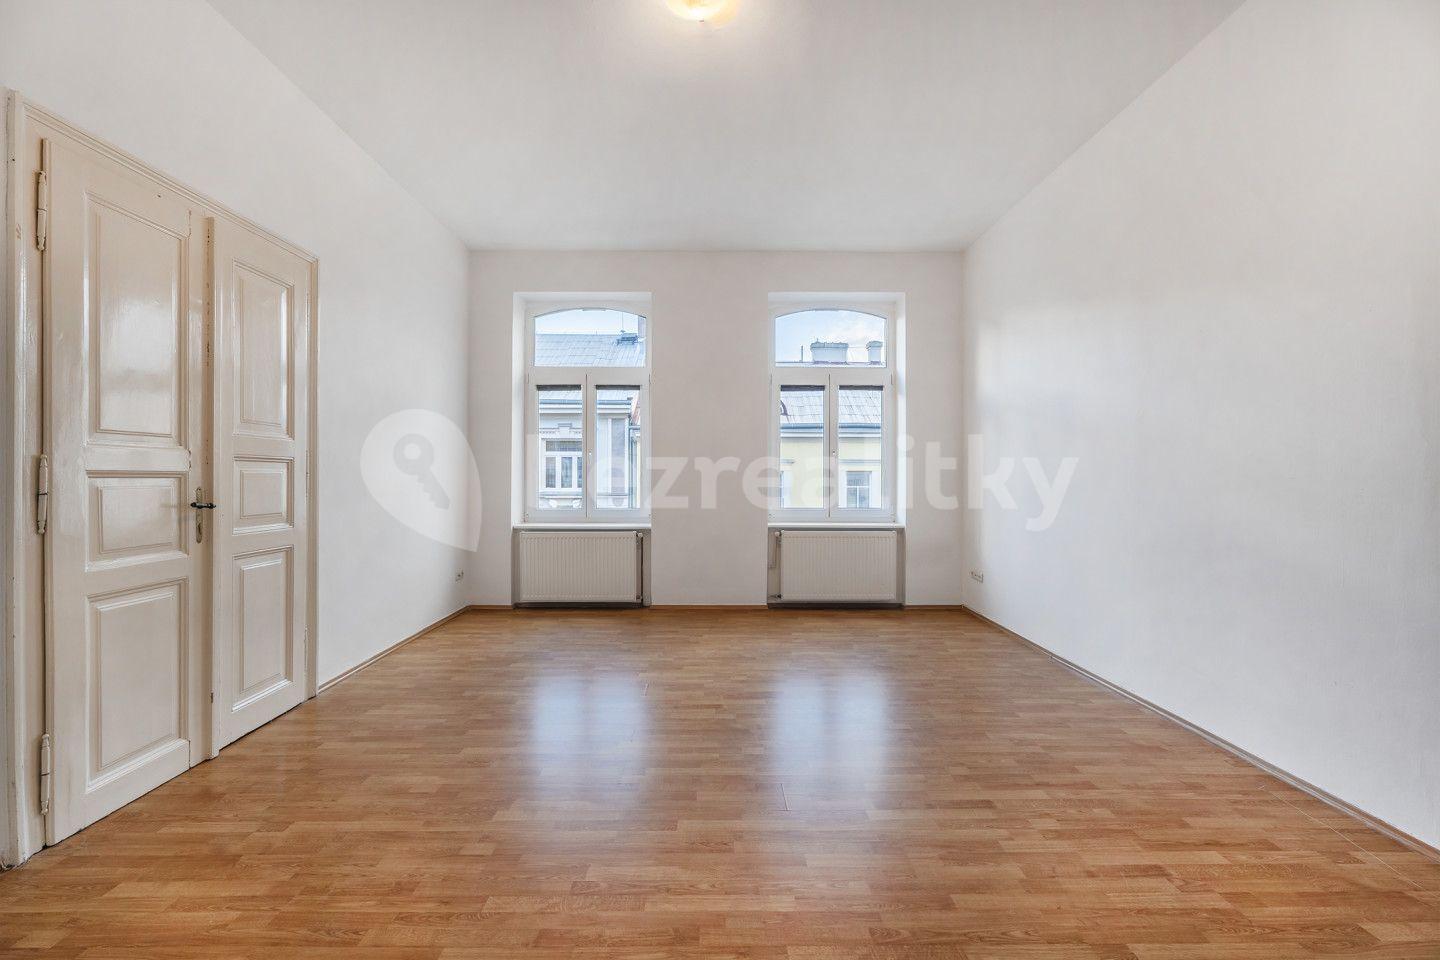 2 bedroom flat for sale, 70 m², Bezručova, Děčín, Ústecký Region